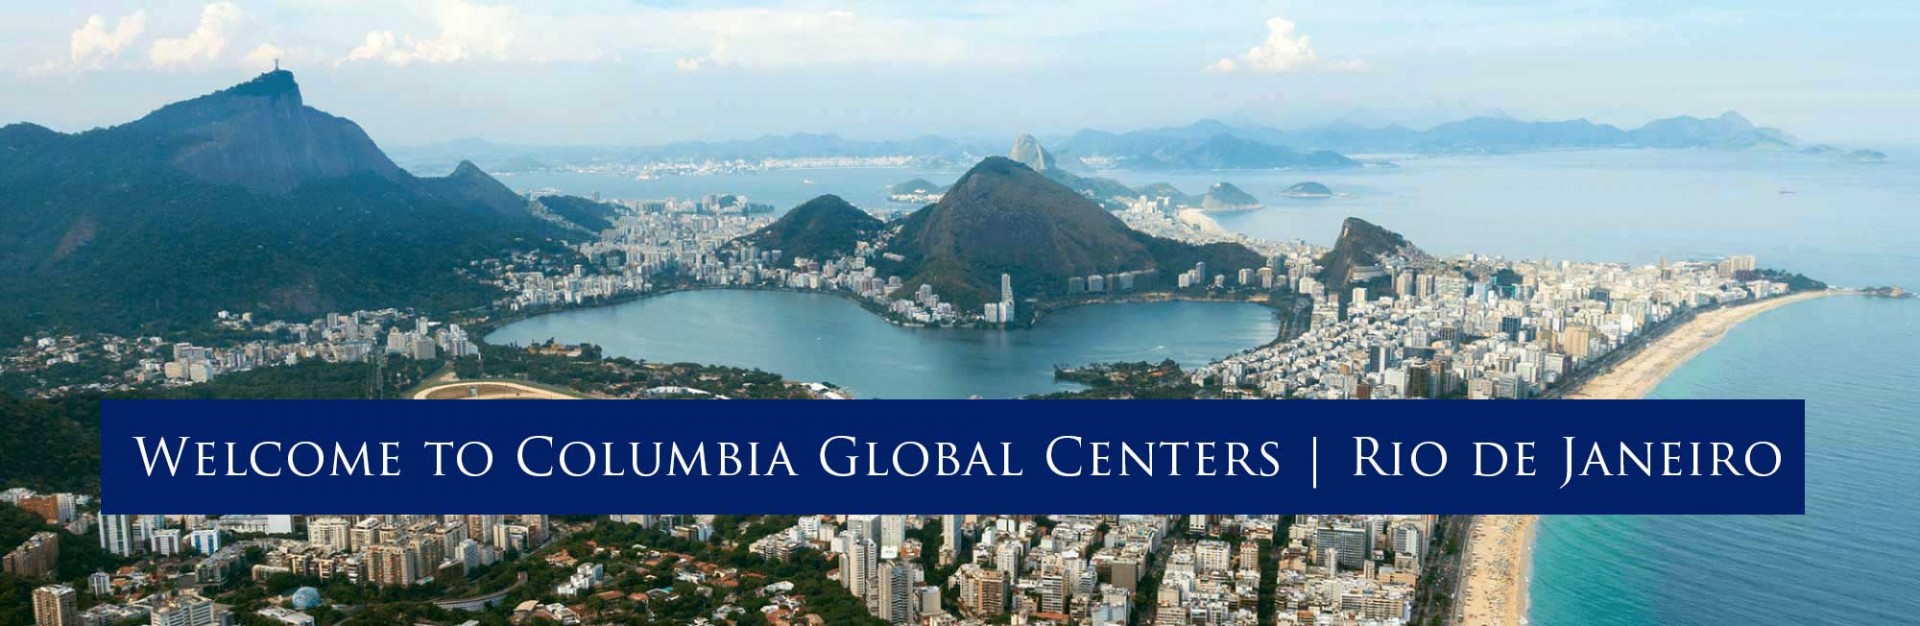 Welcome to Columbia Global Centers | Rio de Janeiro